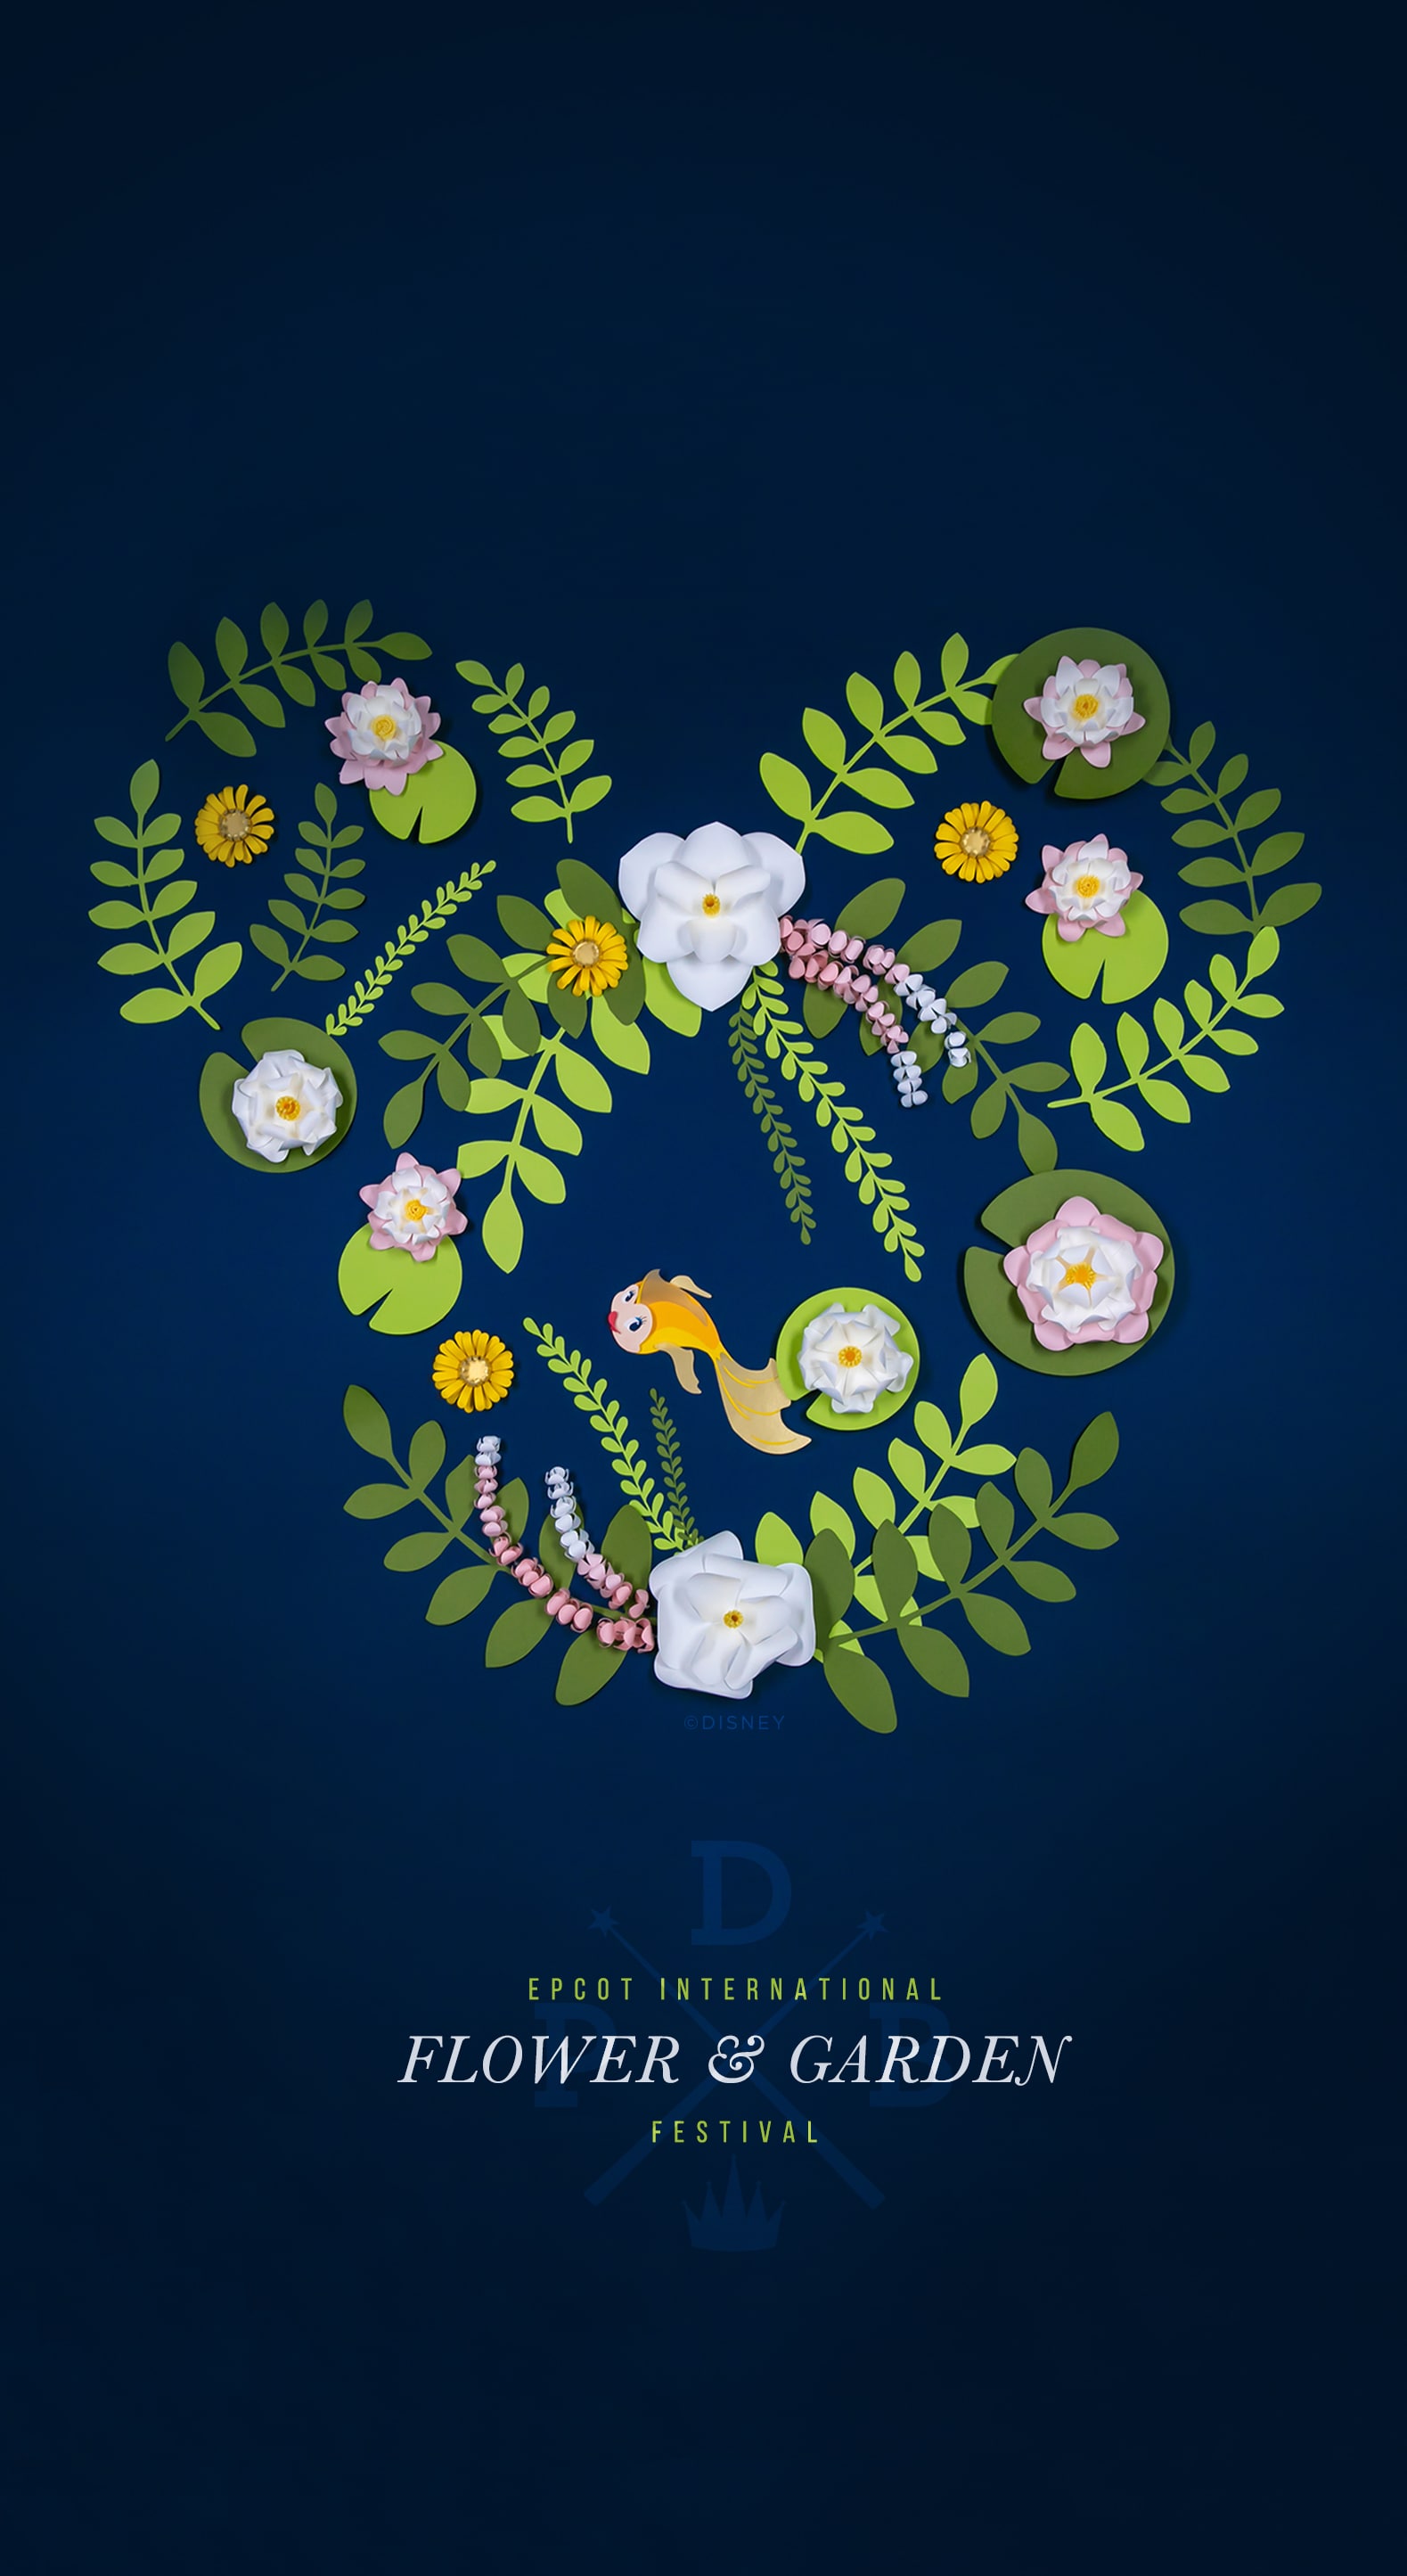 19 Epcot International Flower Garden Festival Wallpaper Iphone Android Disney Parks Blog